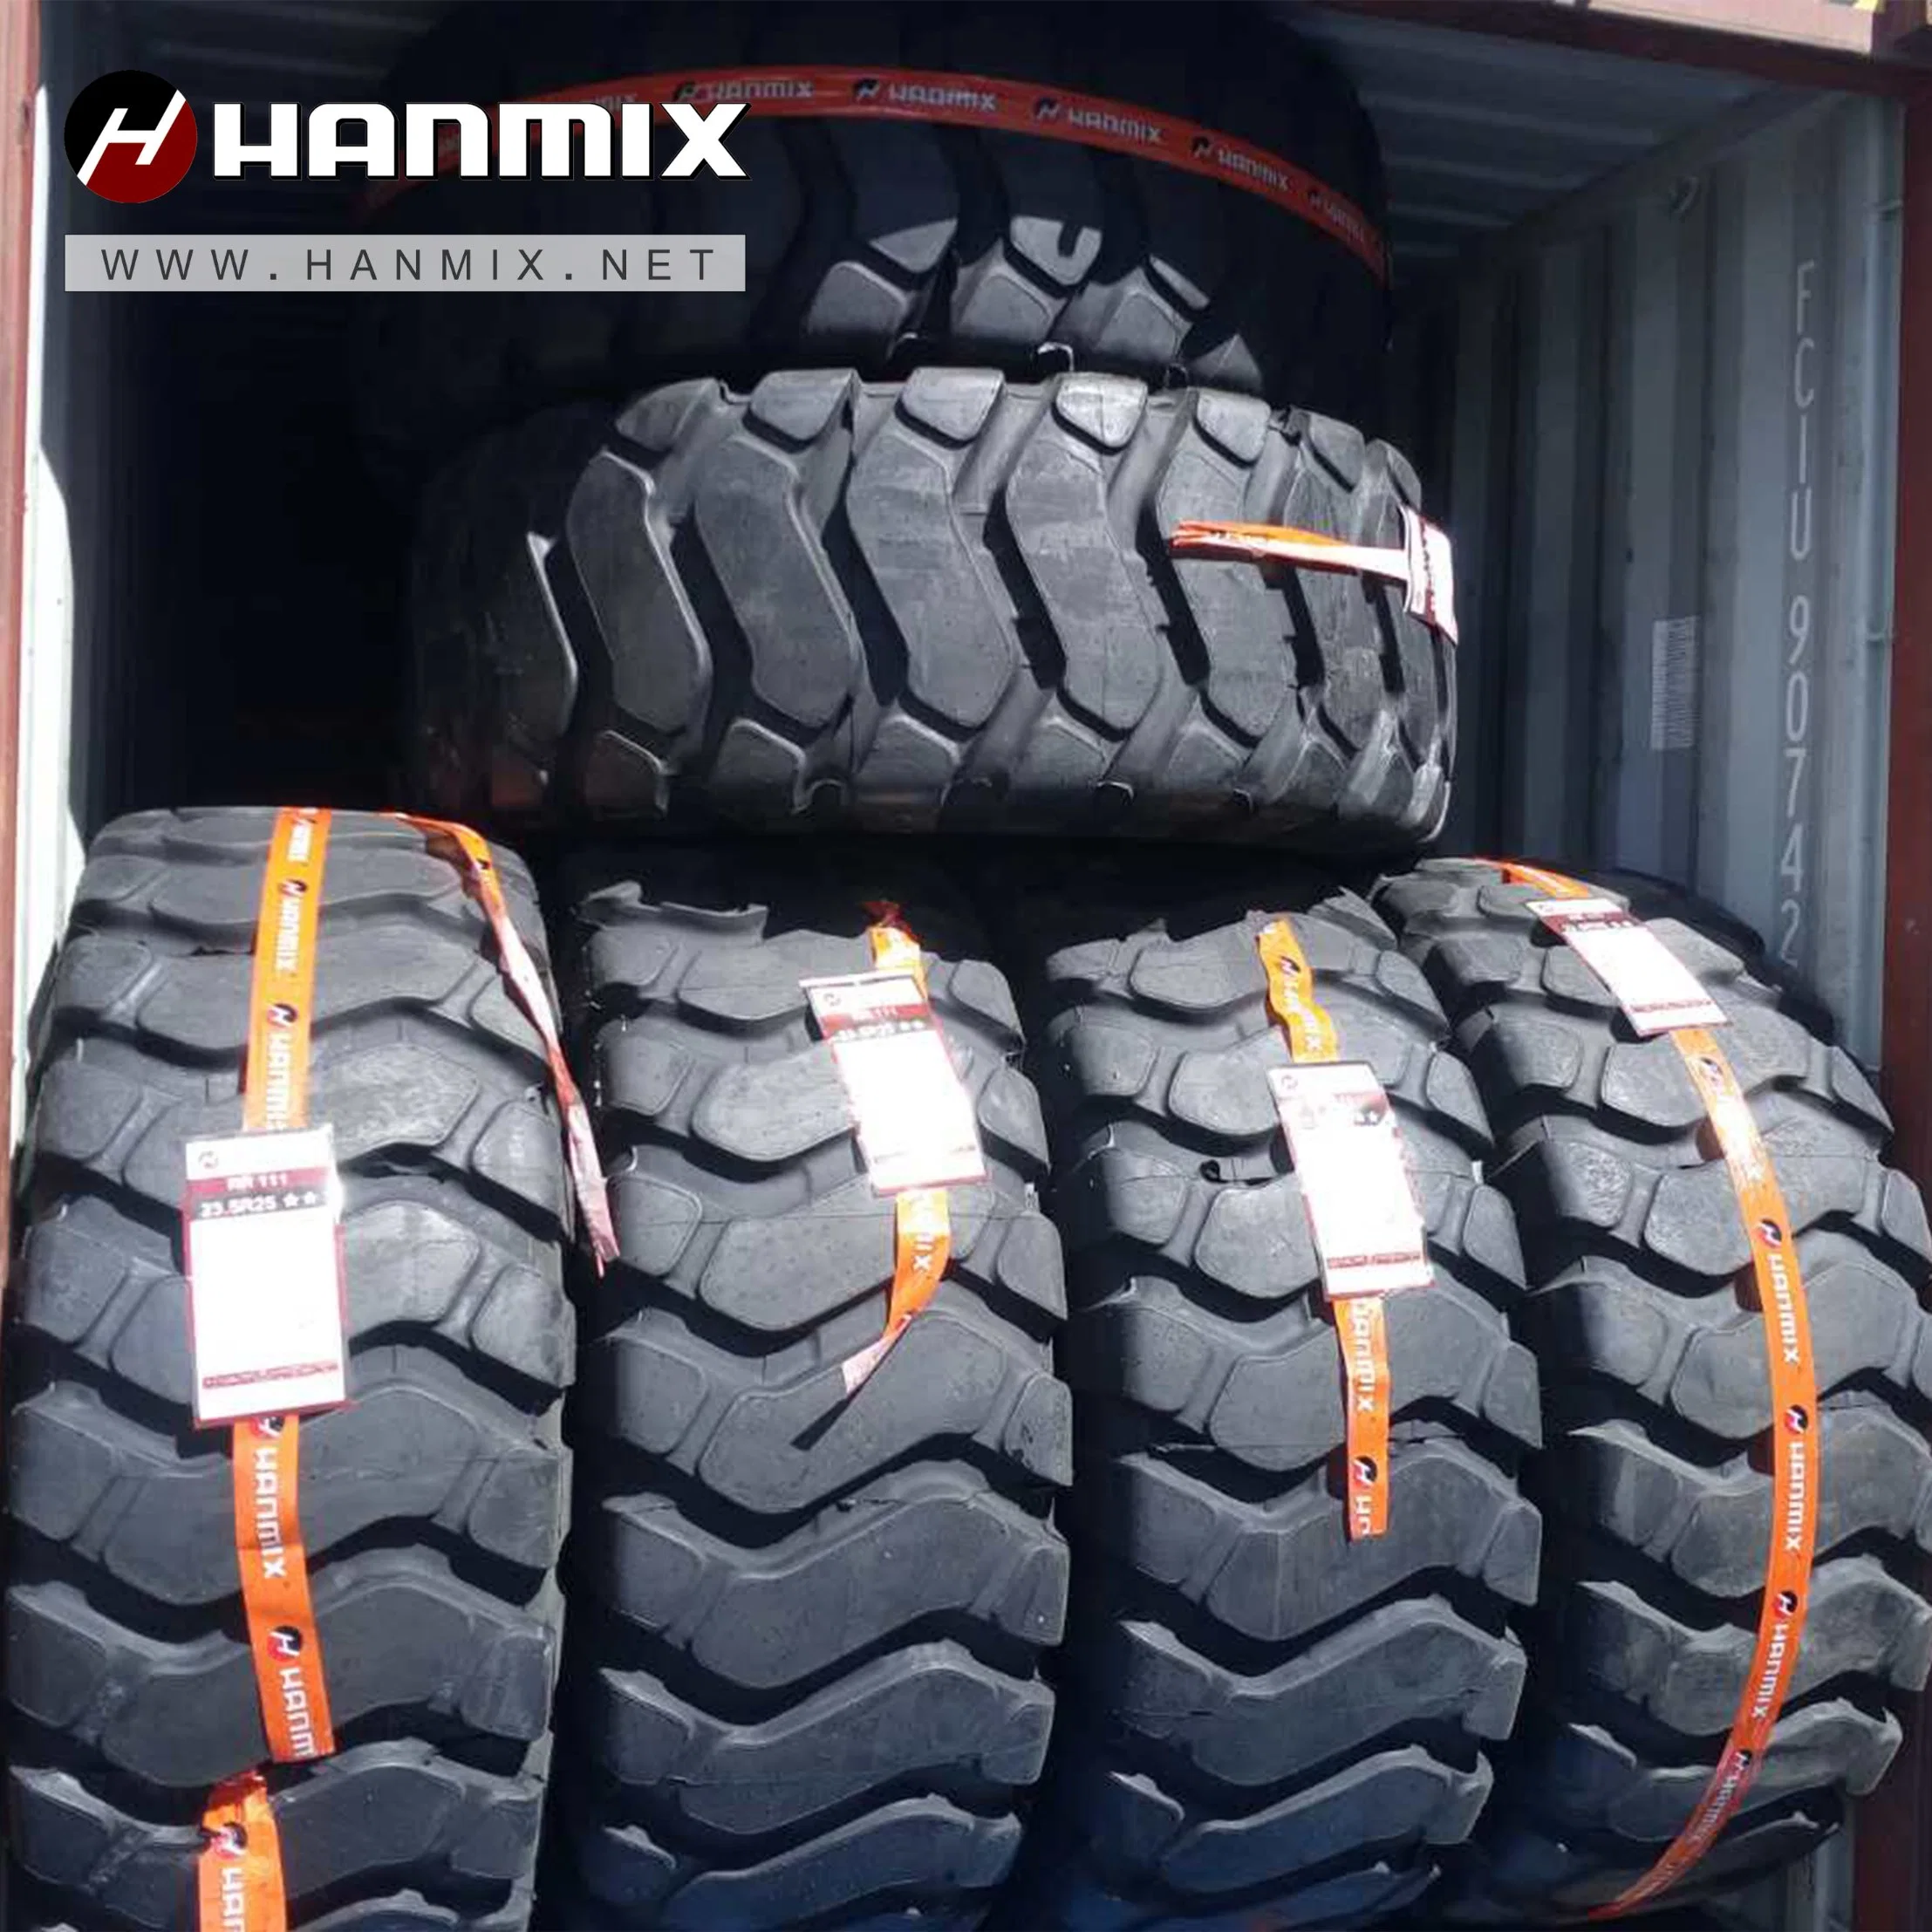 Neumático para todoterreno Hanmix neumático para uso en carretera E3/L3 Cargador neumático de acero Neumático radial 17.5r25 (445/80R25) 20.5r25 (525/80R25)